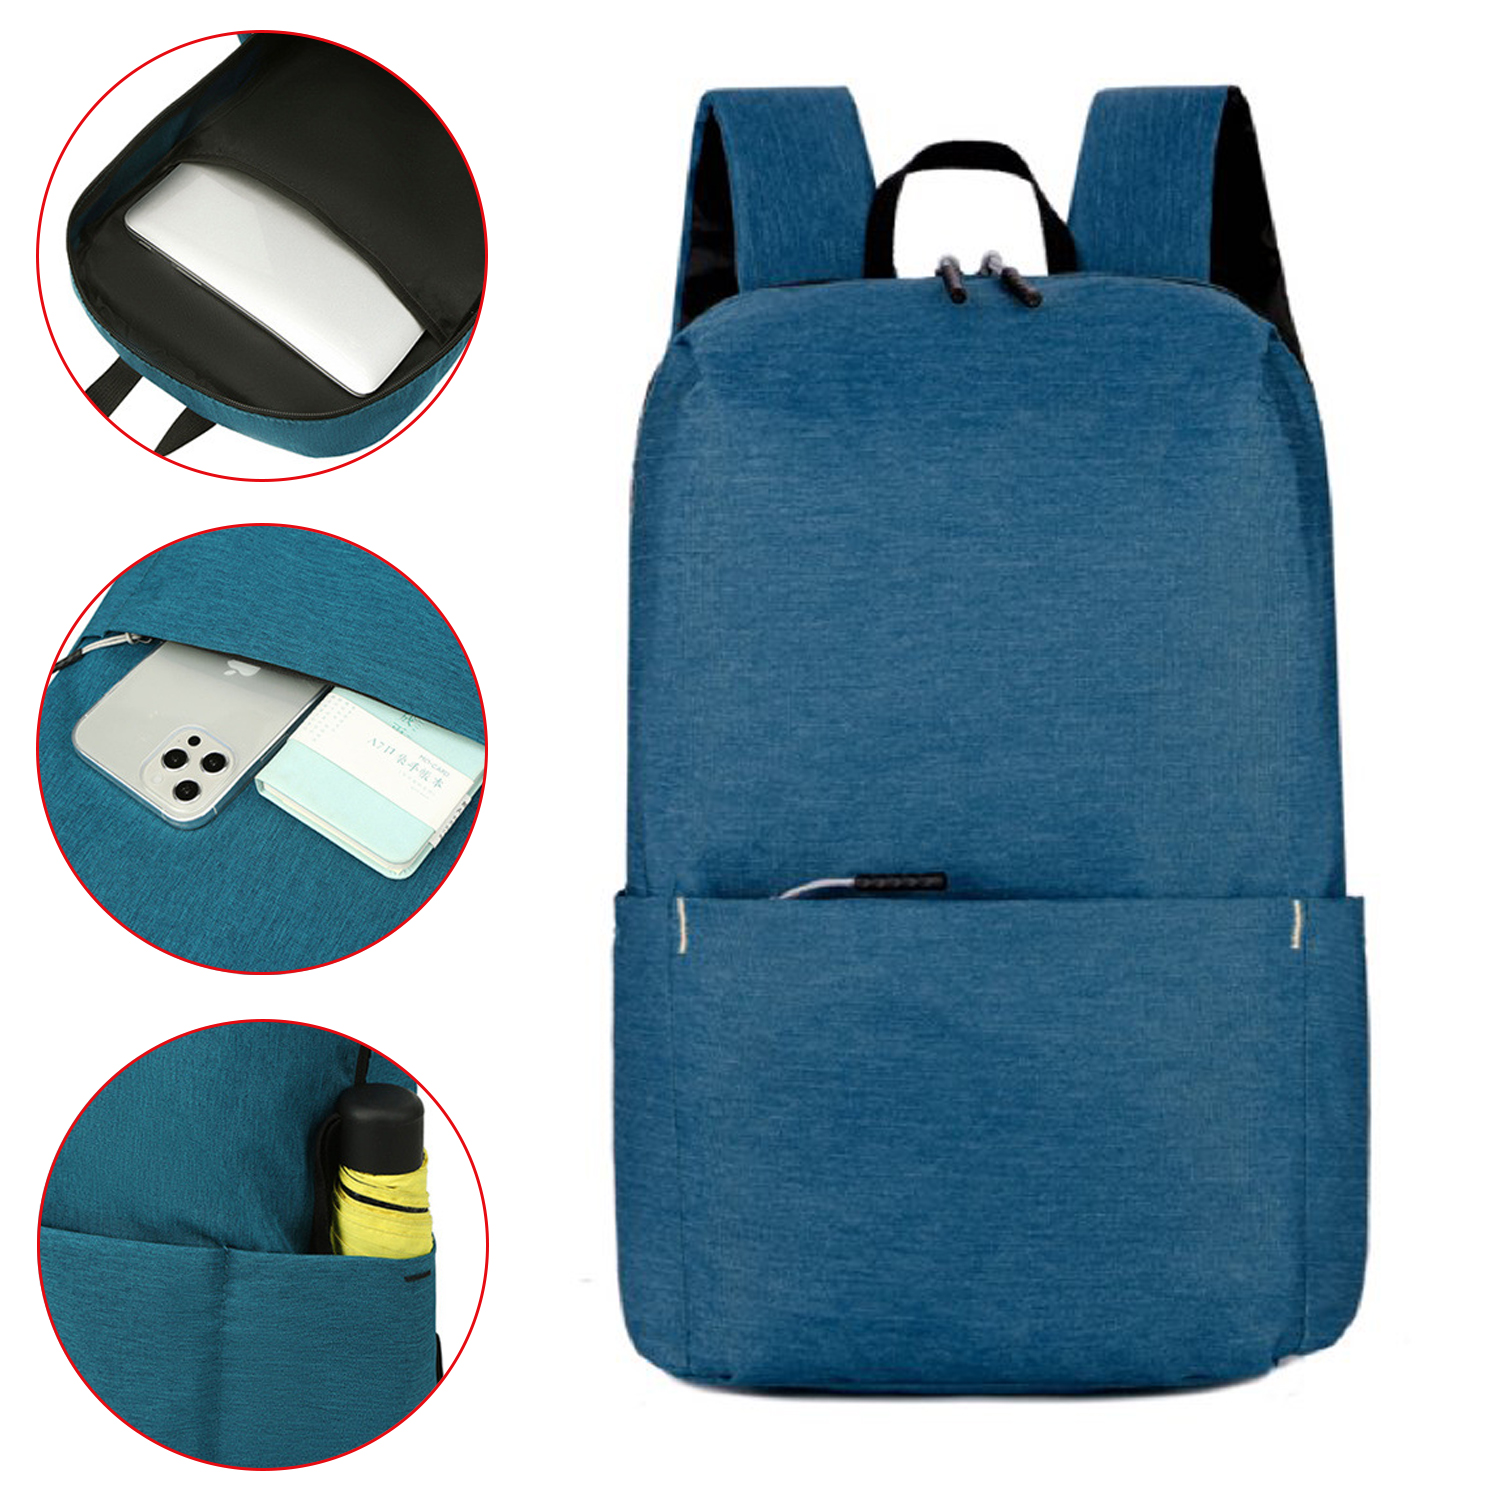 Men's Backpack Multifunctional Waterproof Bags For Business Laptop Backpack Bagpack Nylon Casual Rucksack